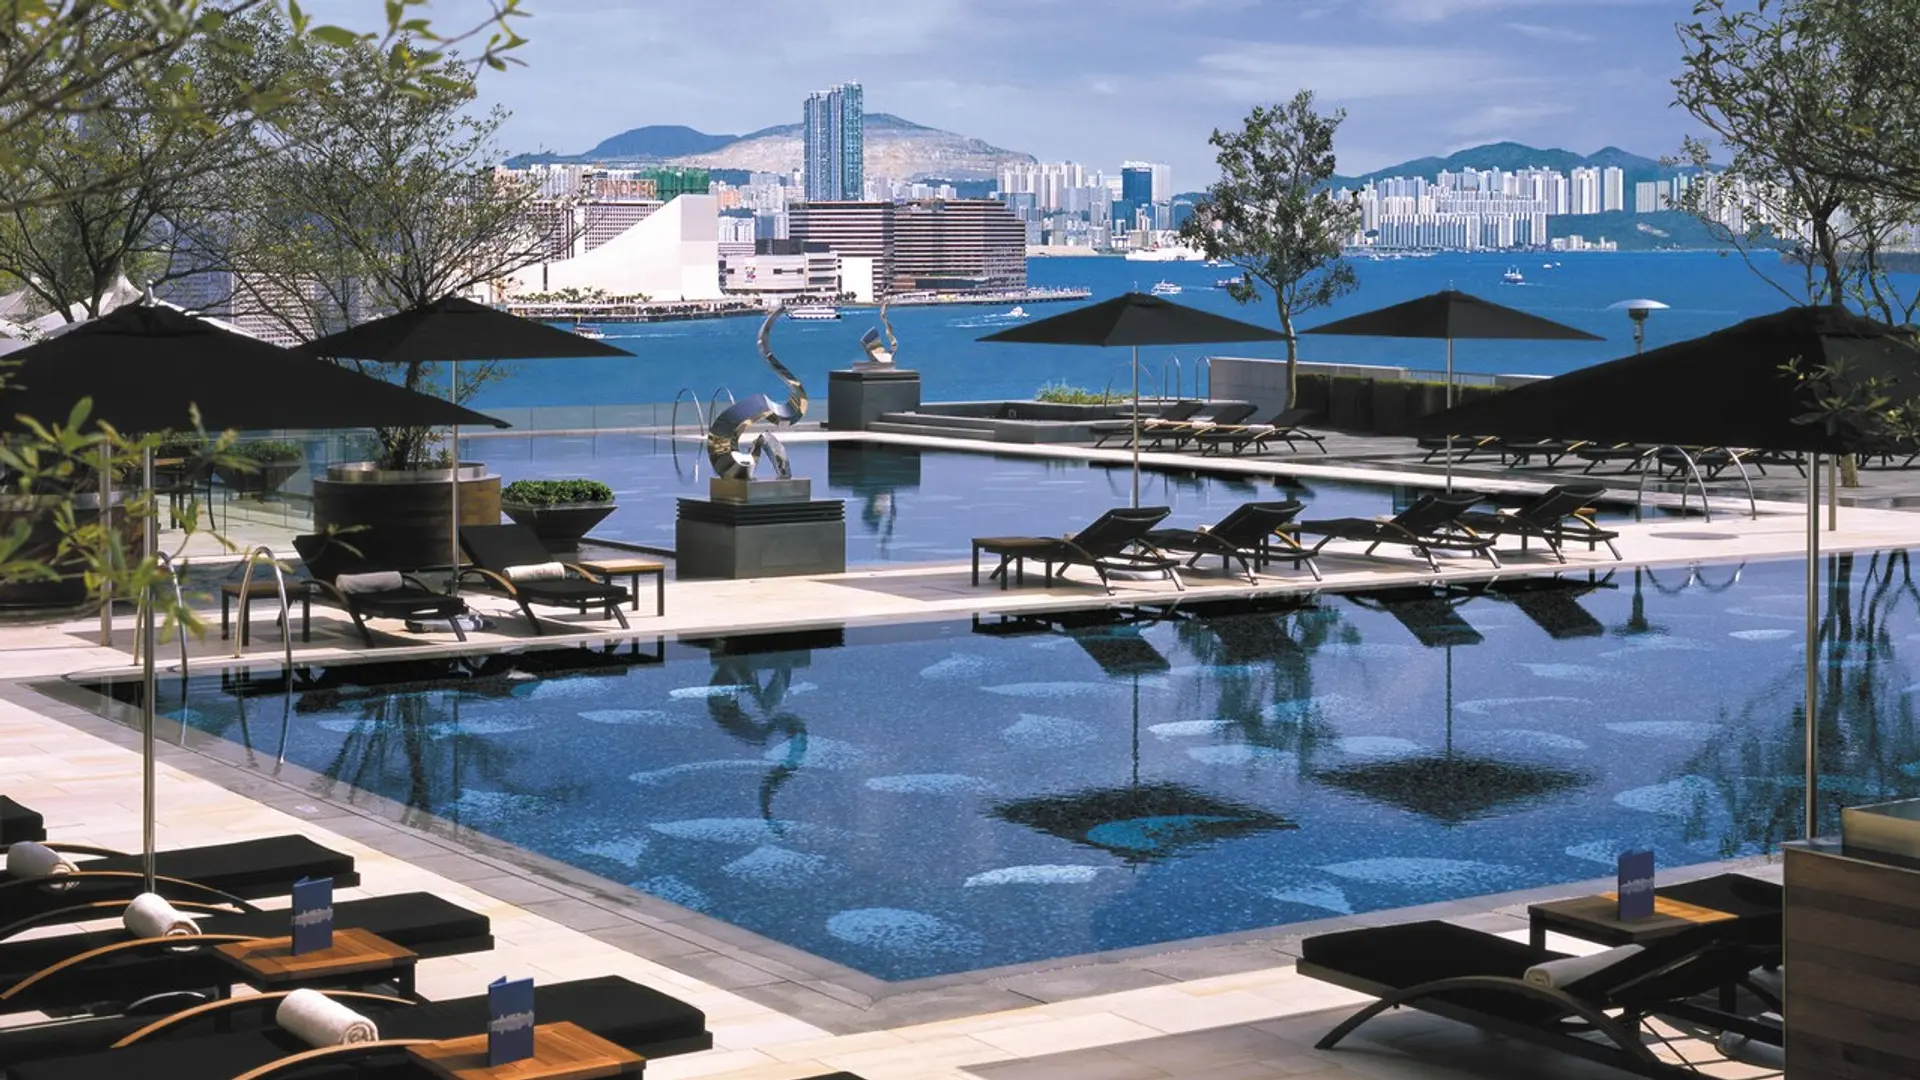 Hotel review Service & Facilities' - Four Seasons Hotel Hong Kong - 0